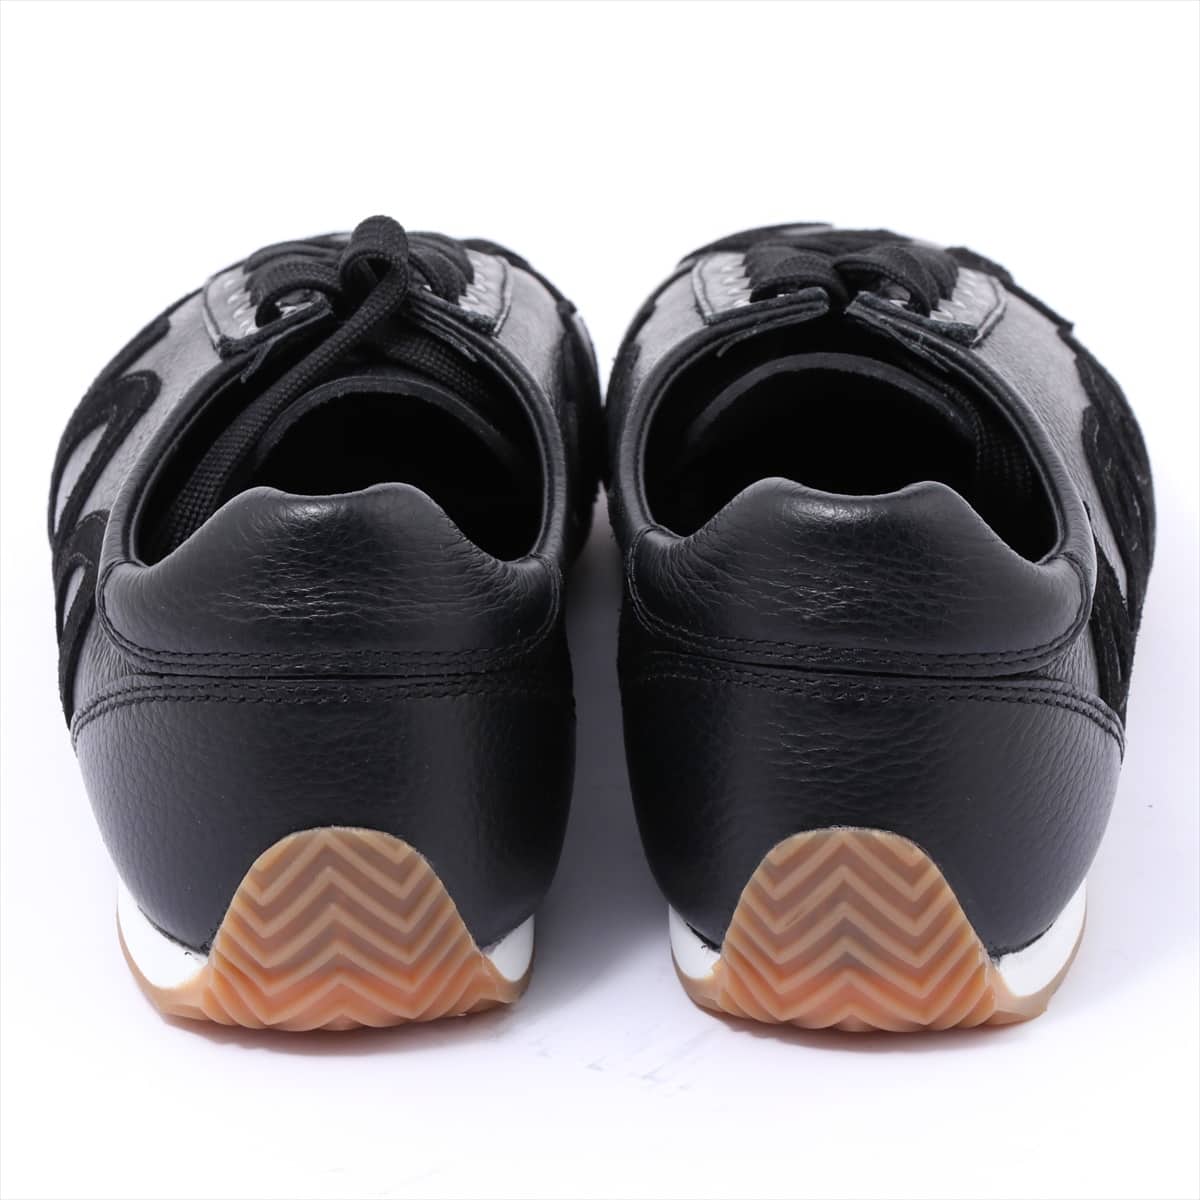 Dolce & Gabbana Leather Sneakers 6 Men's Black CS0985